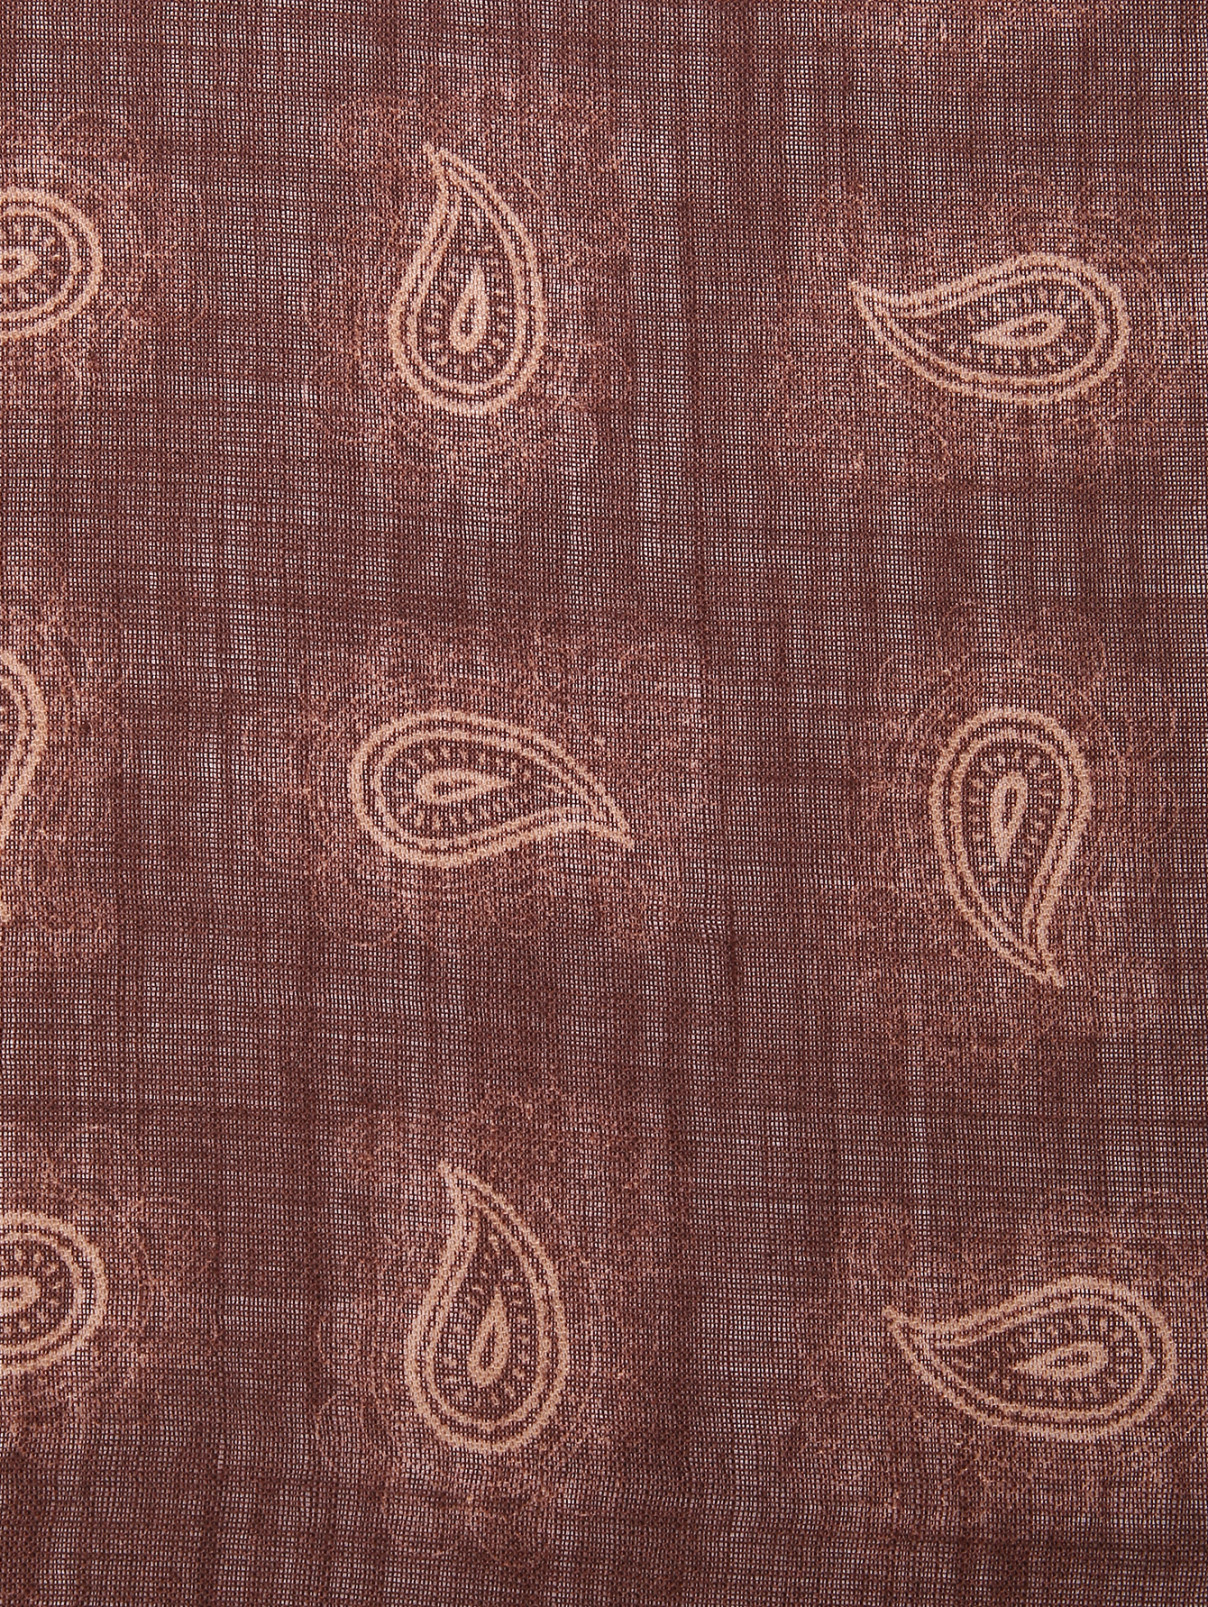 Платок из шерсти и шелка с узором LARDINI  –  Деталь1  – Цвет:  Бежевый